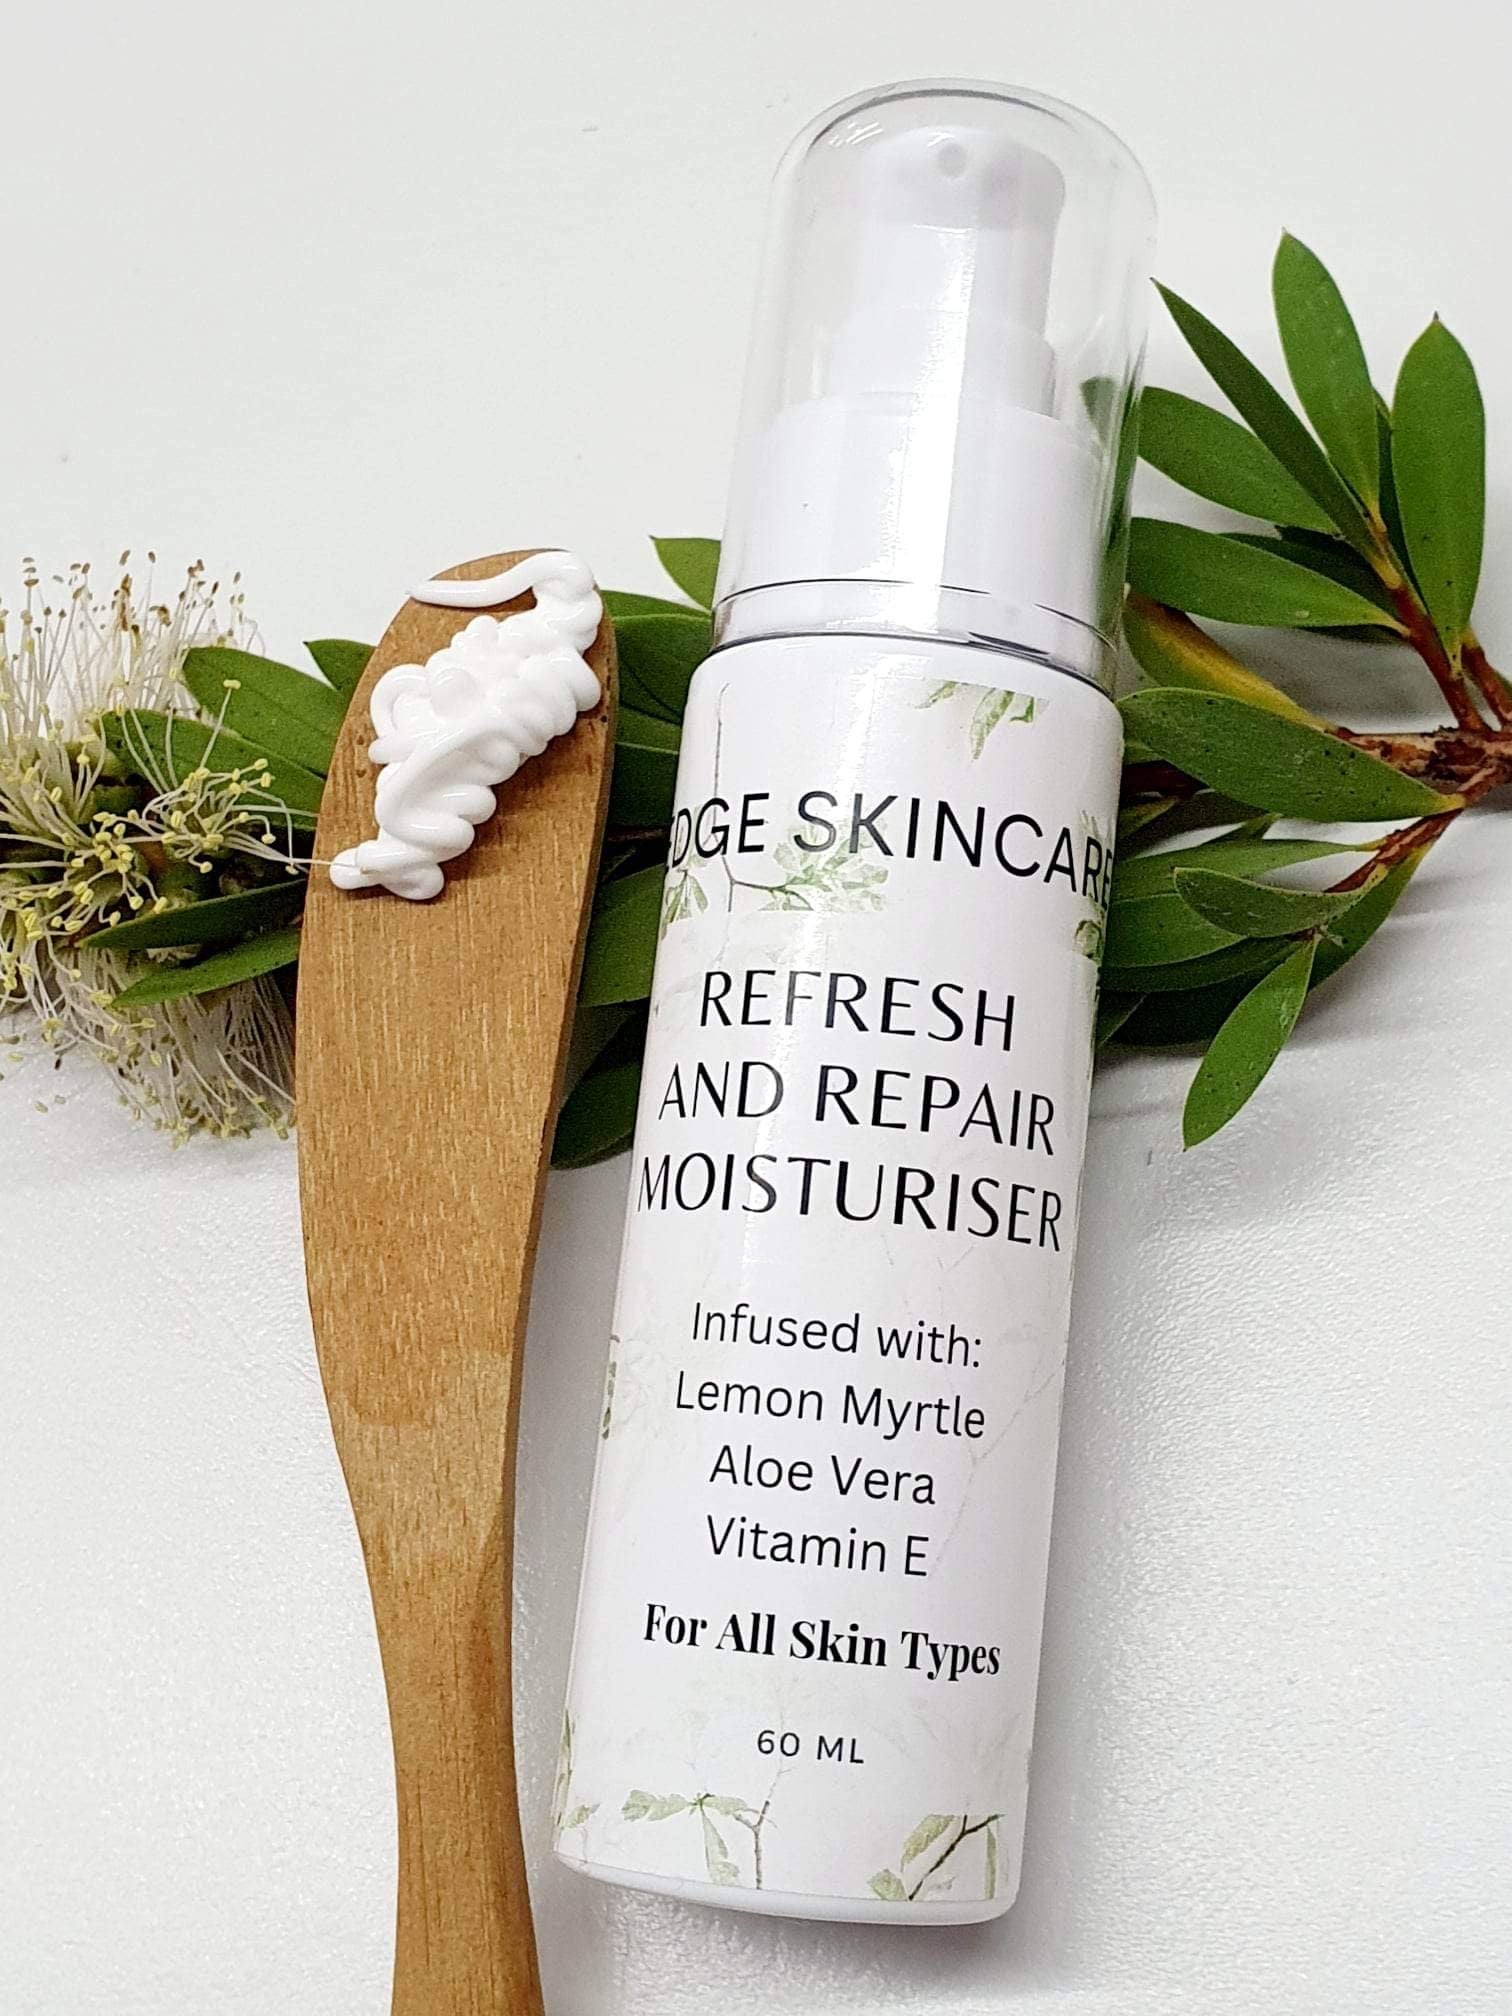 Refresh and repair moisturiser - Lemon Myrtle